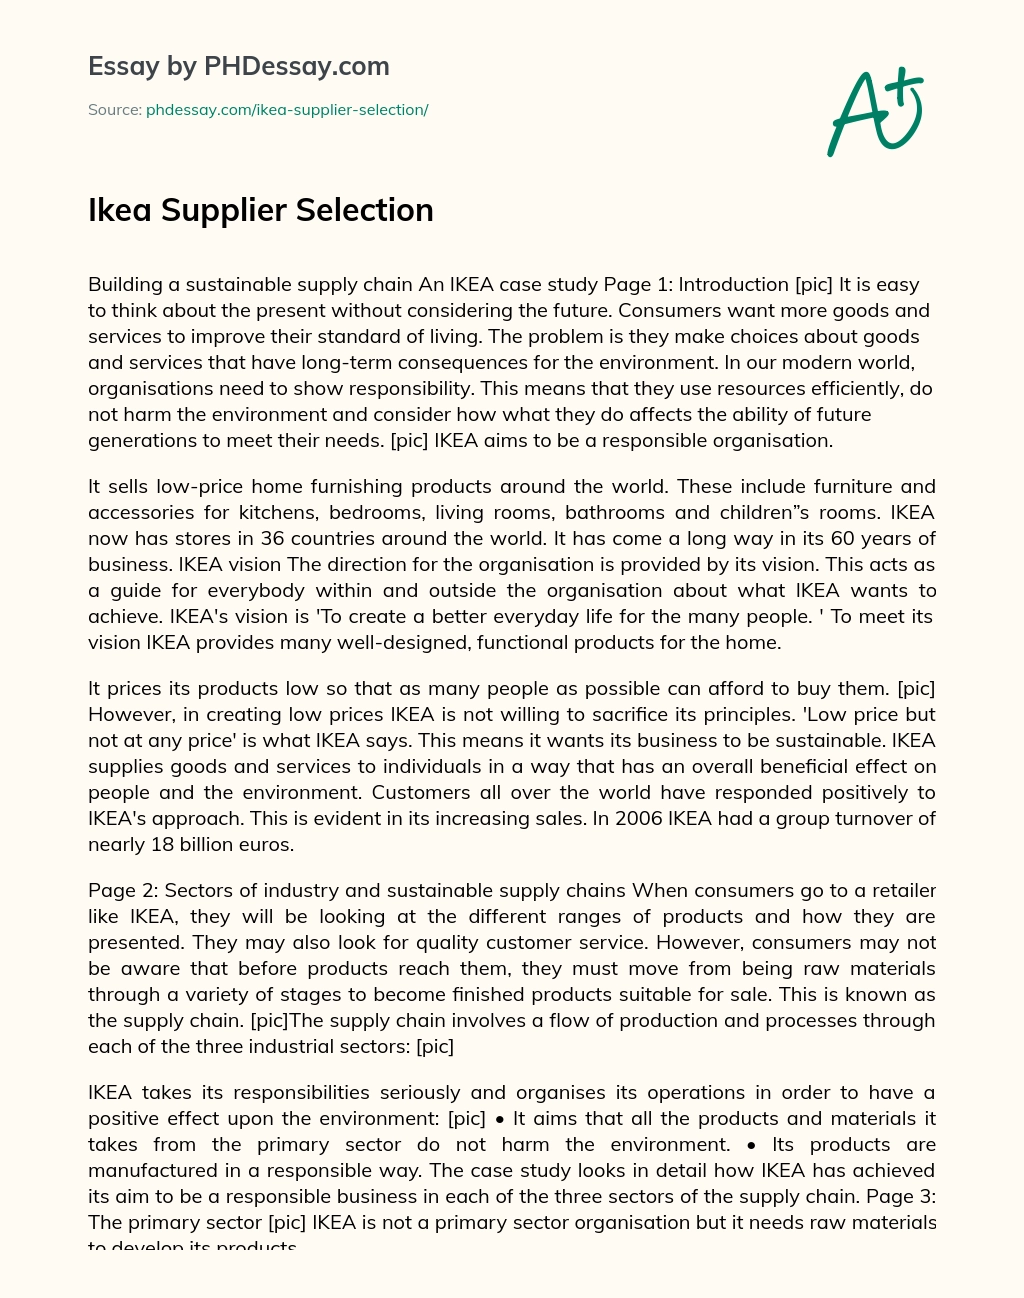 Ikea Supplier Selection essay